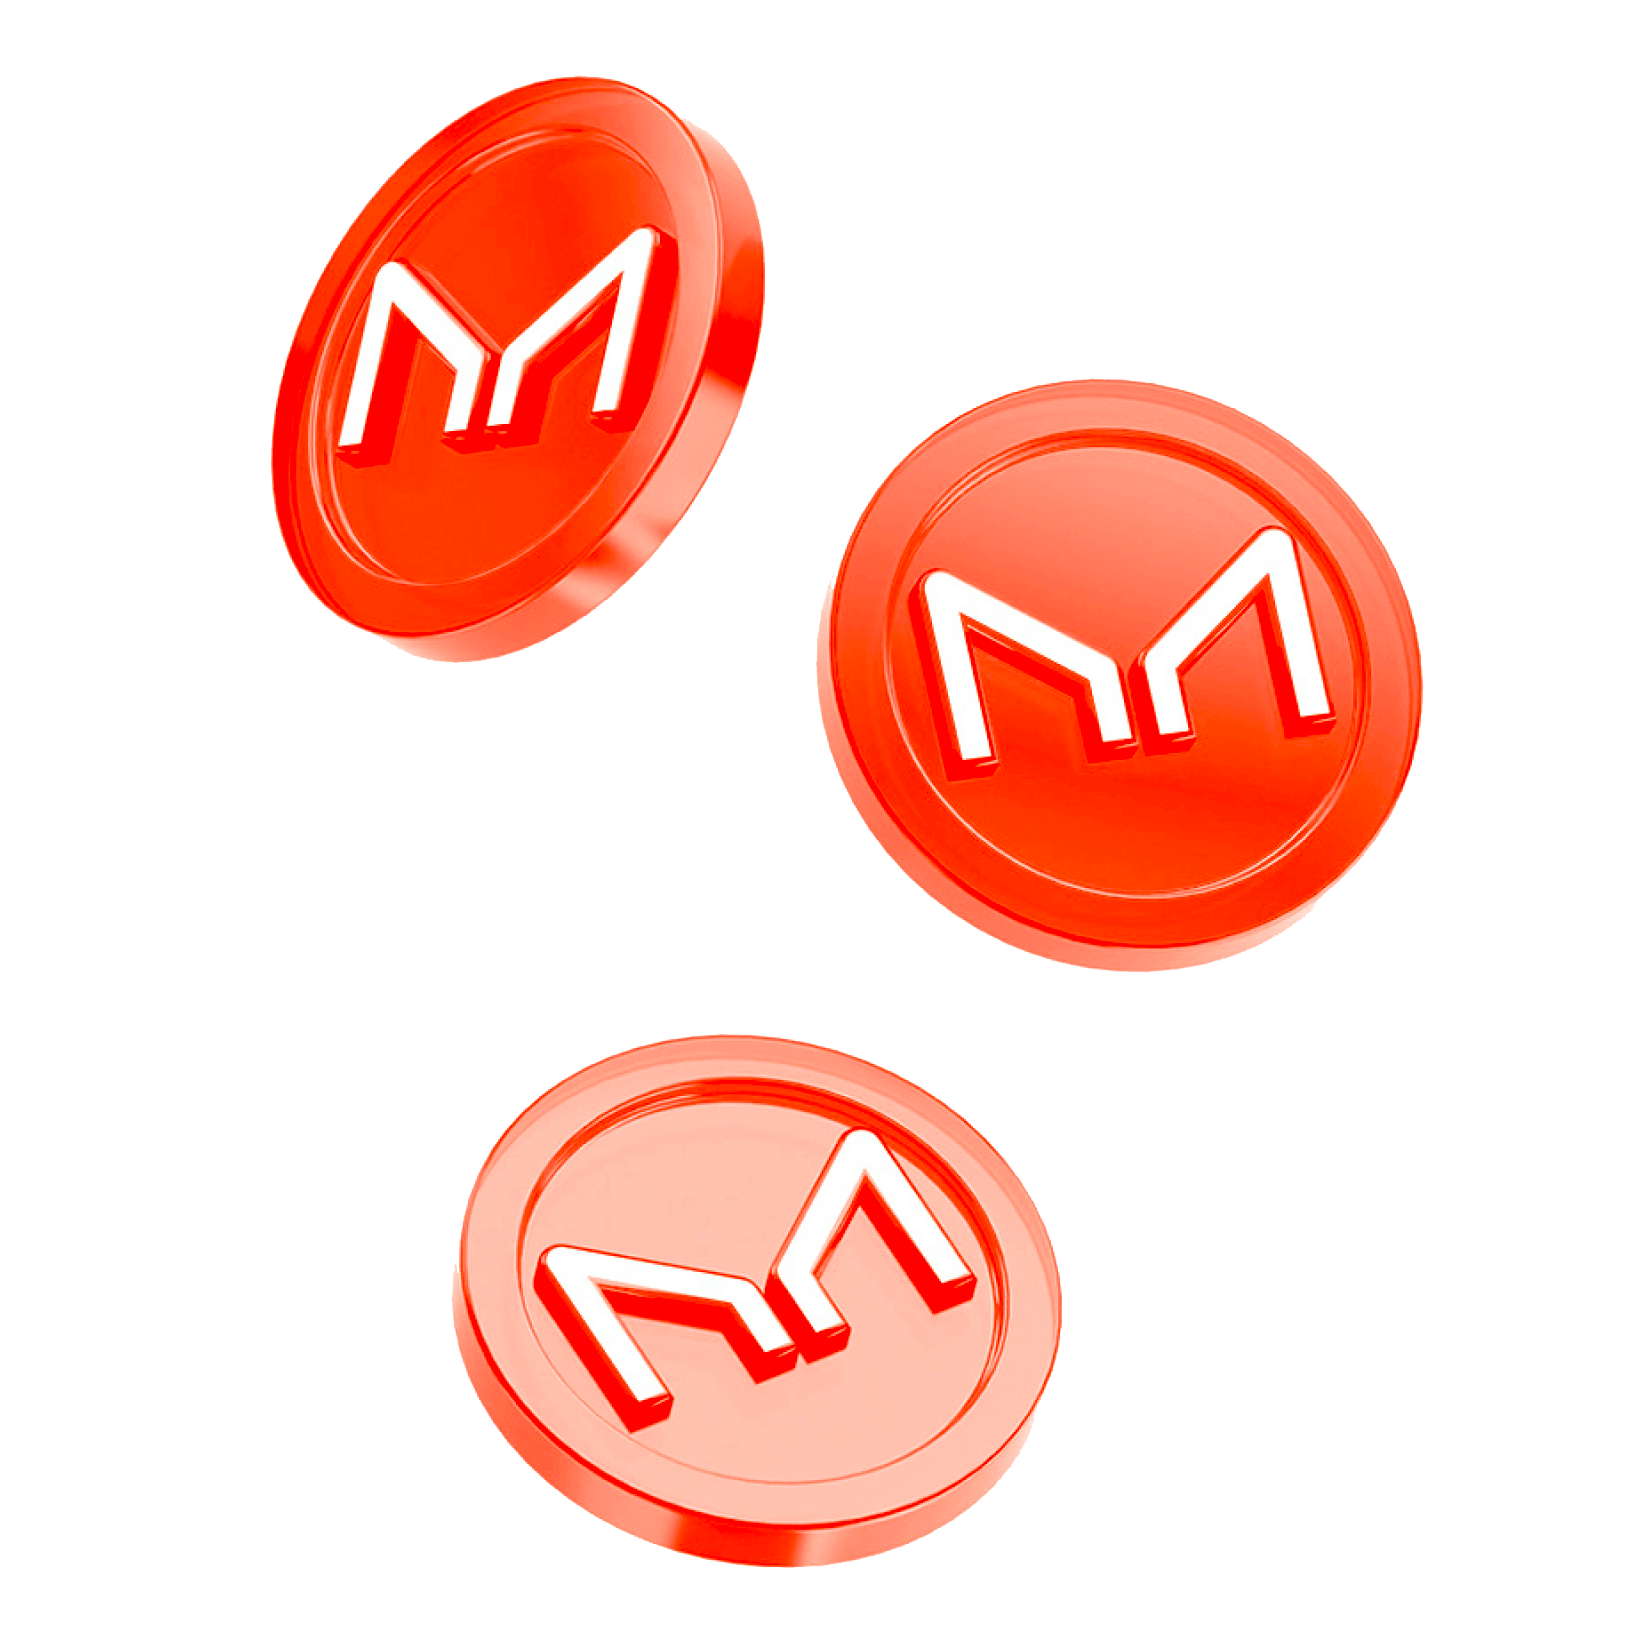 Maker crypto coins